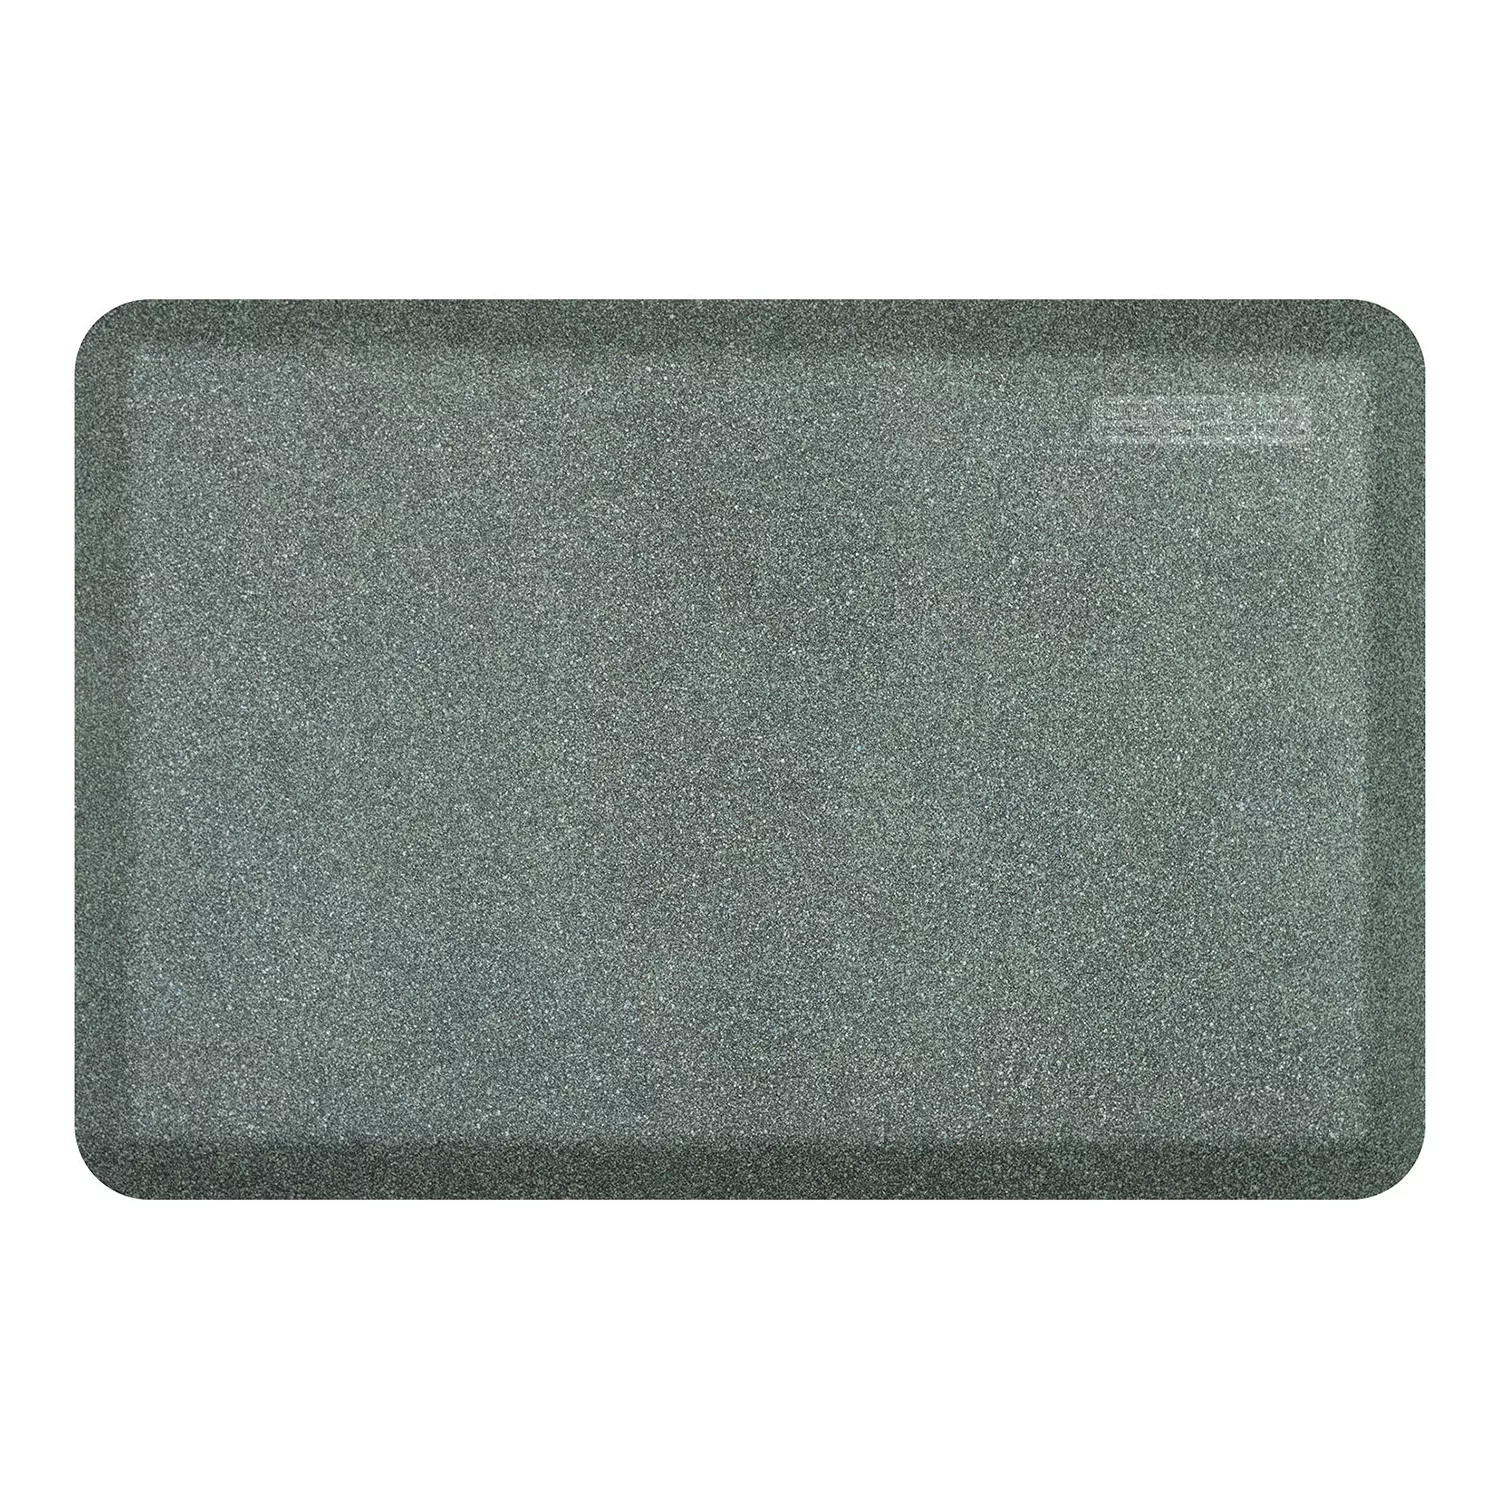 WellnessMats Granite Collection Anti-Fatigue Floor Mat, Steel, 72